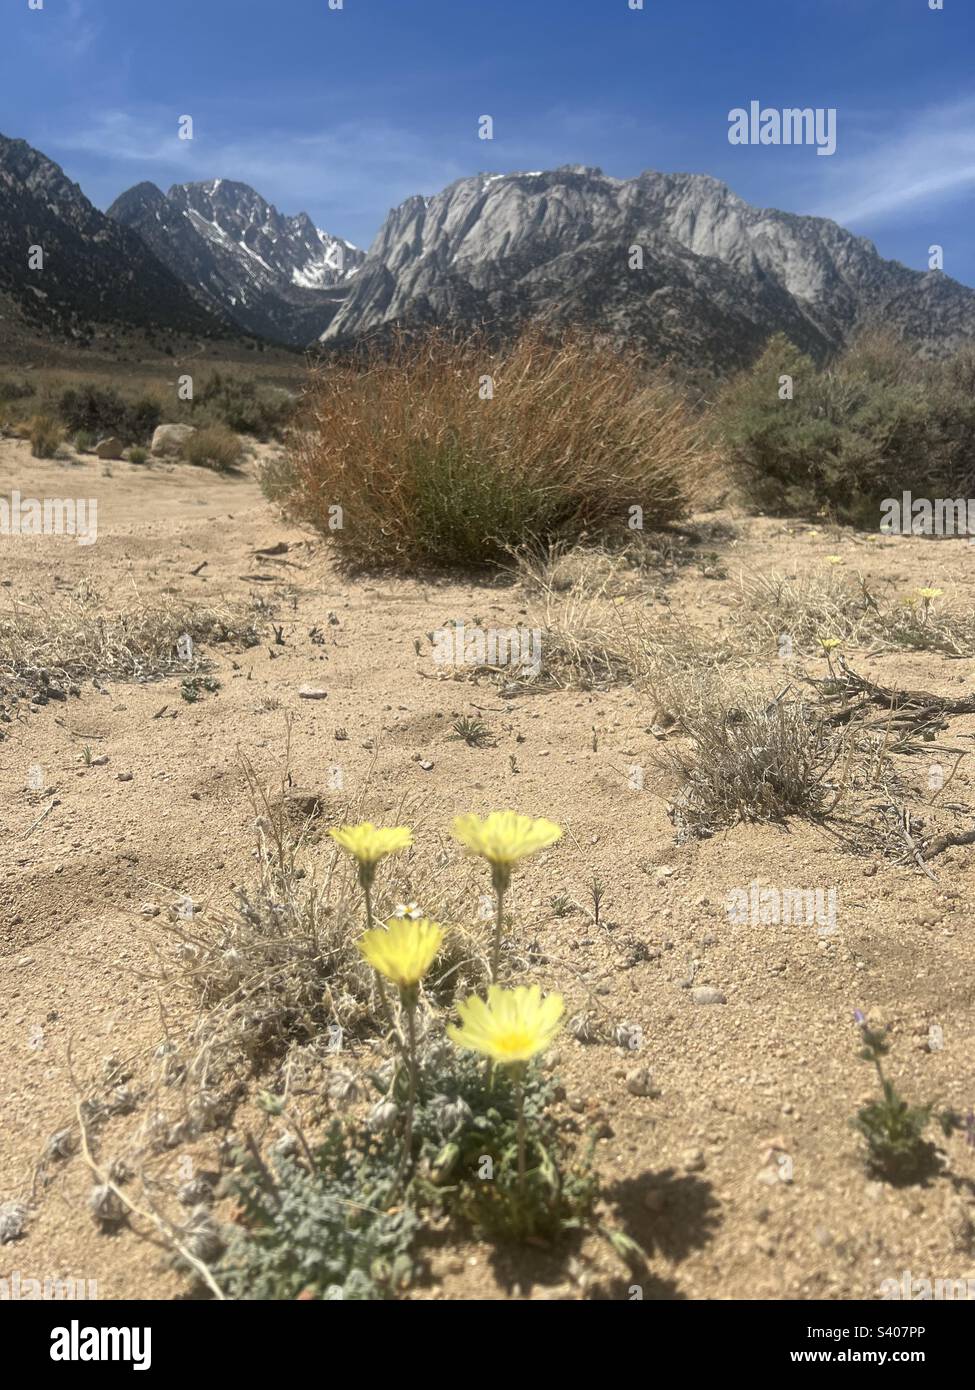 Yellow desert flowers in front of mountain range near Lone Pine, California Stock Photo